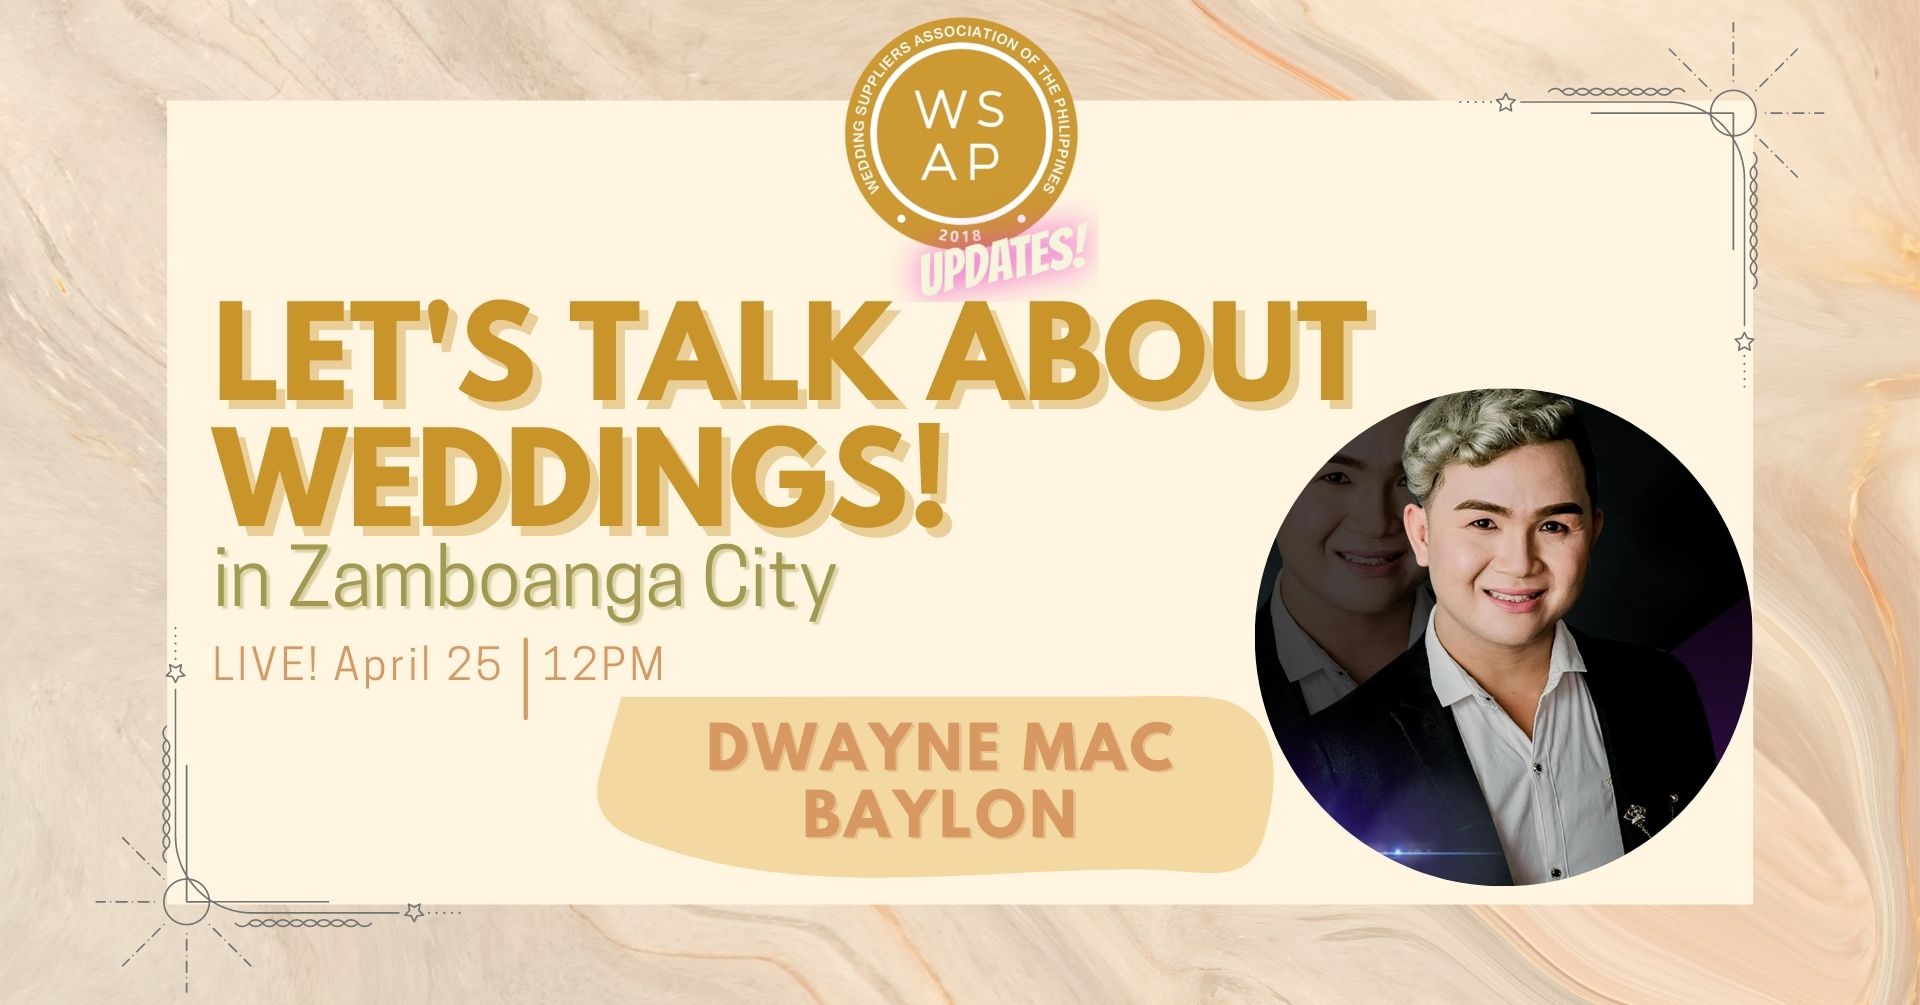 Let's Talk About Weddings in Zamboanga City with Dwayne Mac Baylon